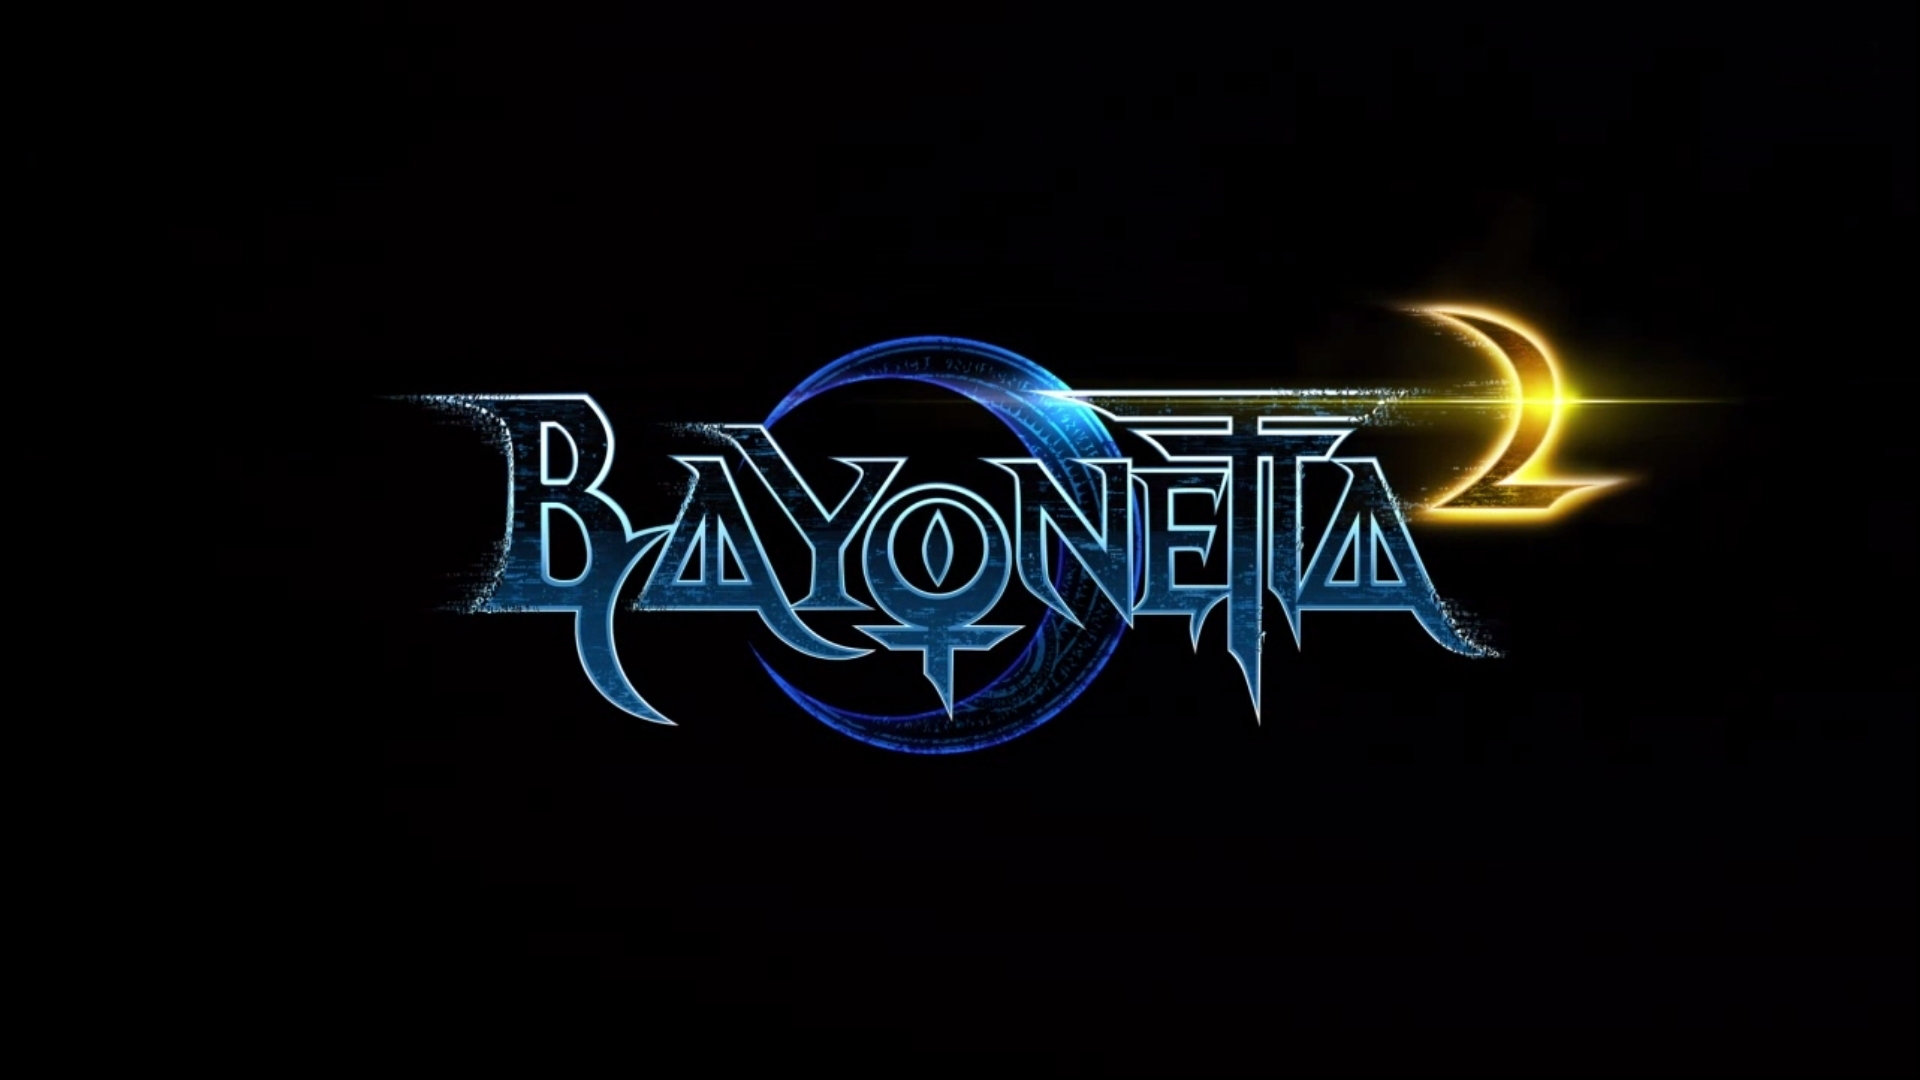 Bayonetta 2 Wallpapers 1920x1080 Full Hd 1080p Desktop Backgrounds Images, Photos, Reviews